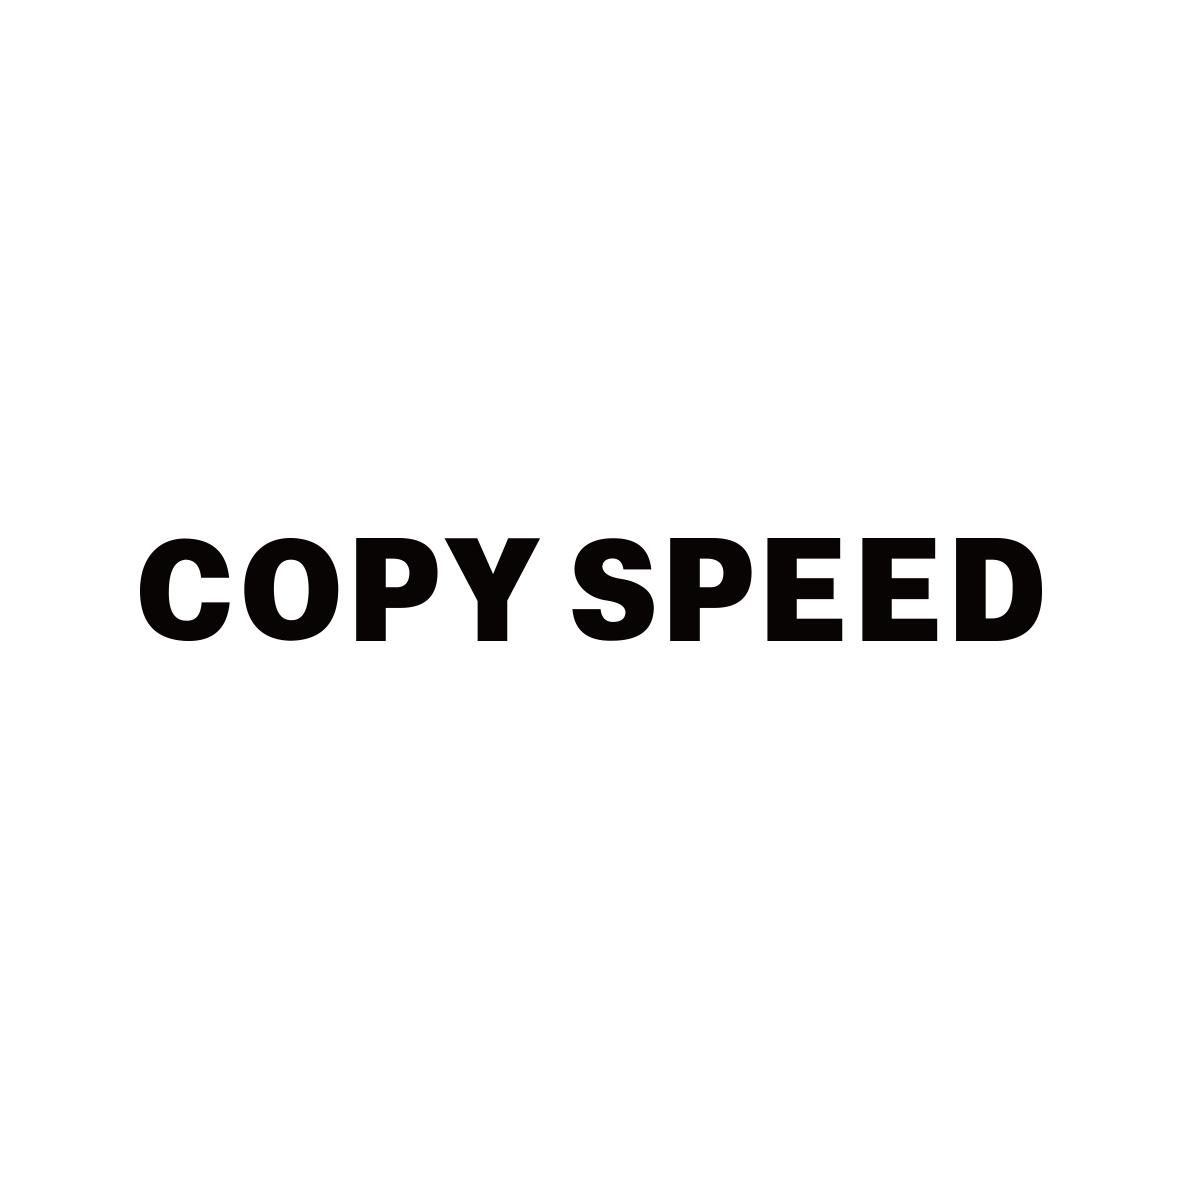 COPY SPEED激光打印纸商标转让费用买卖交易流程